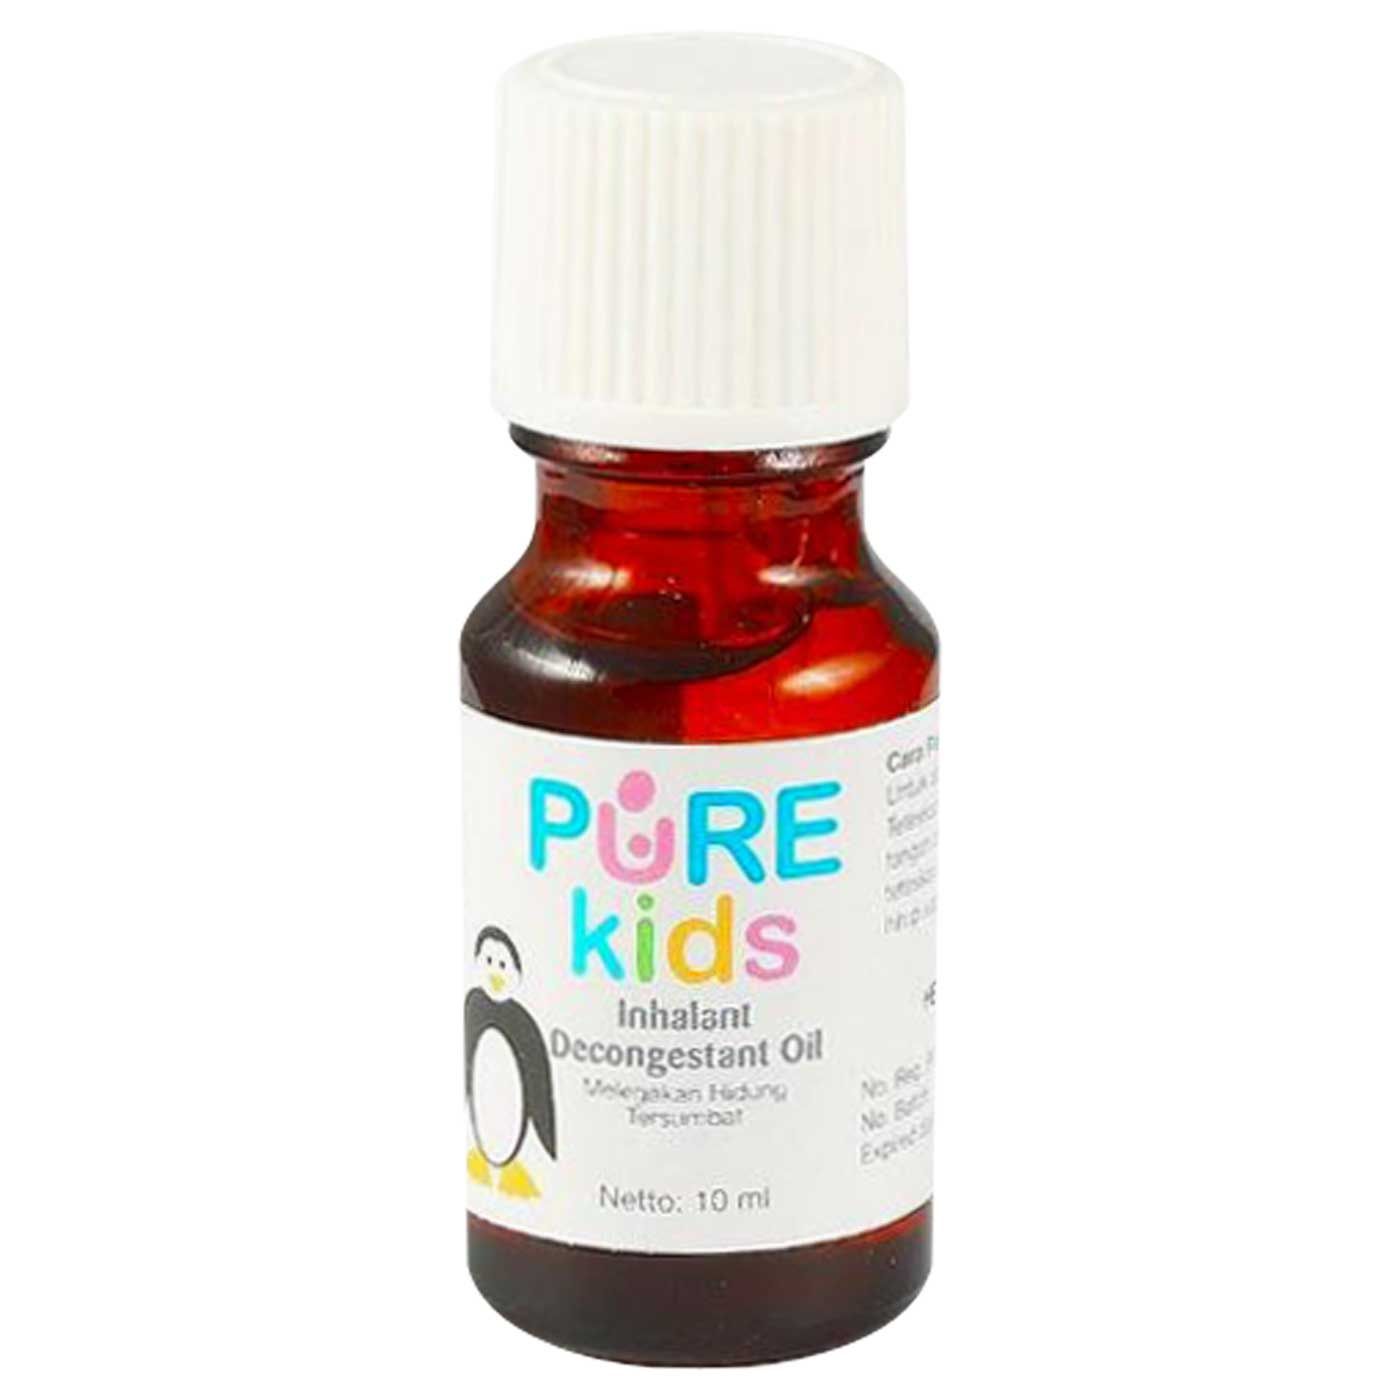 Pure Kids Inhalant Decongestant Oil 10ml - 1